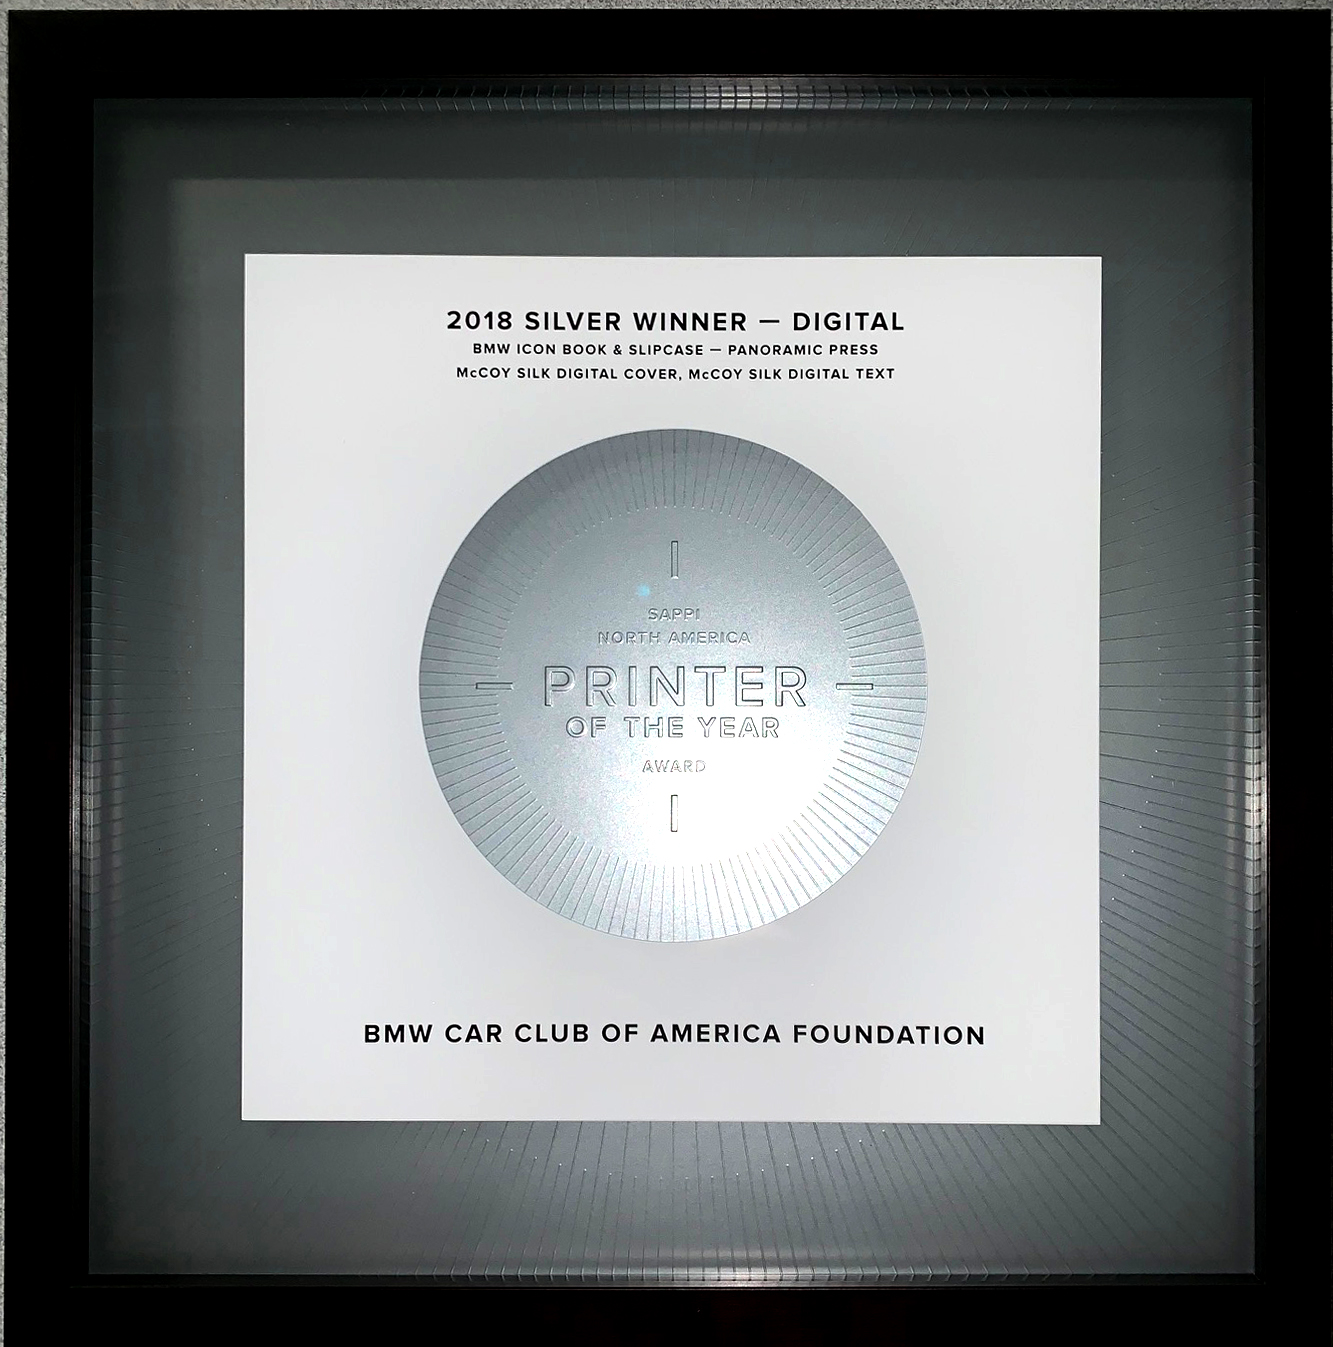 Sappi Silver (Digital) award for the BMW Icon Book & Slipcase